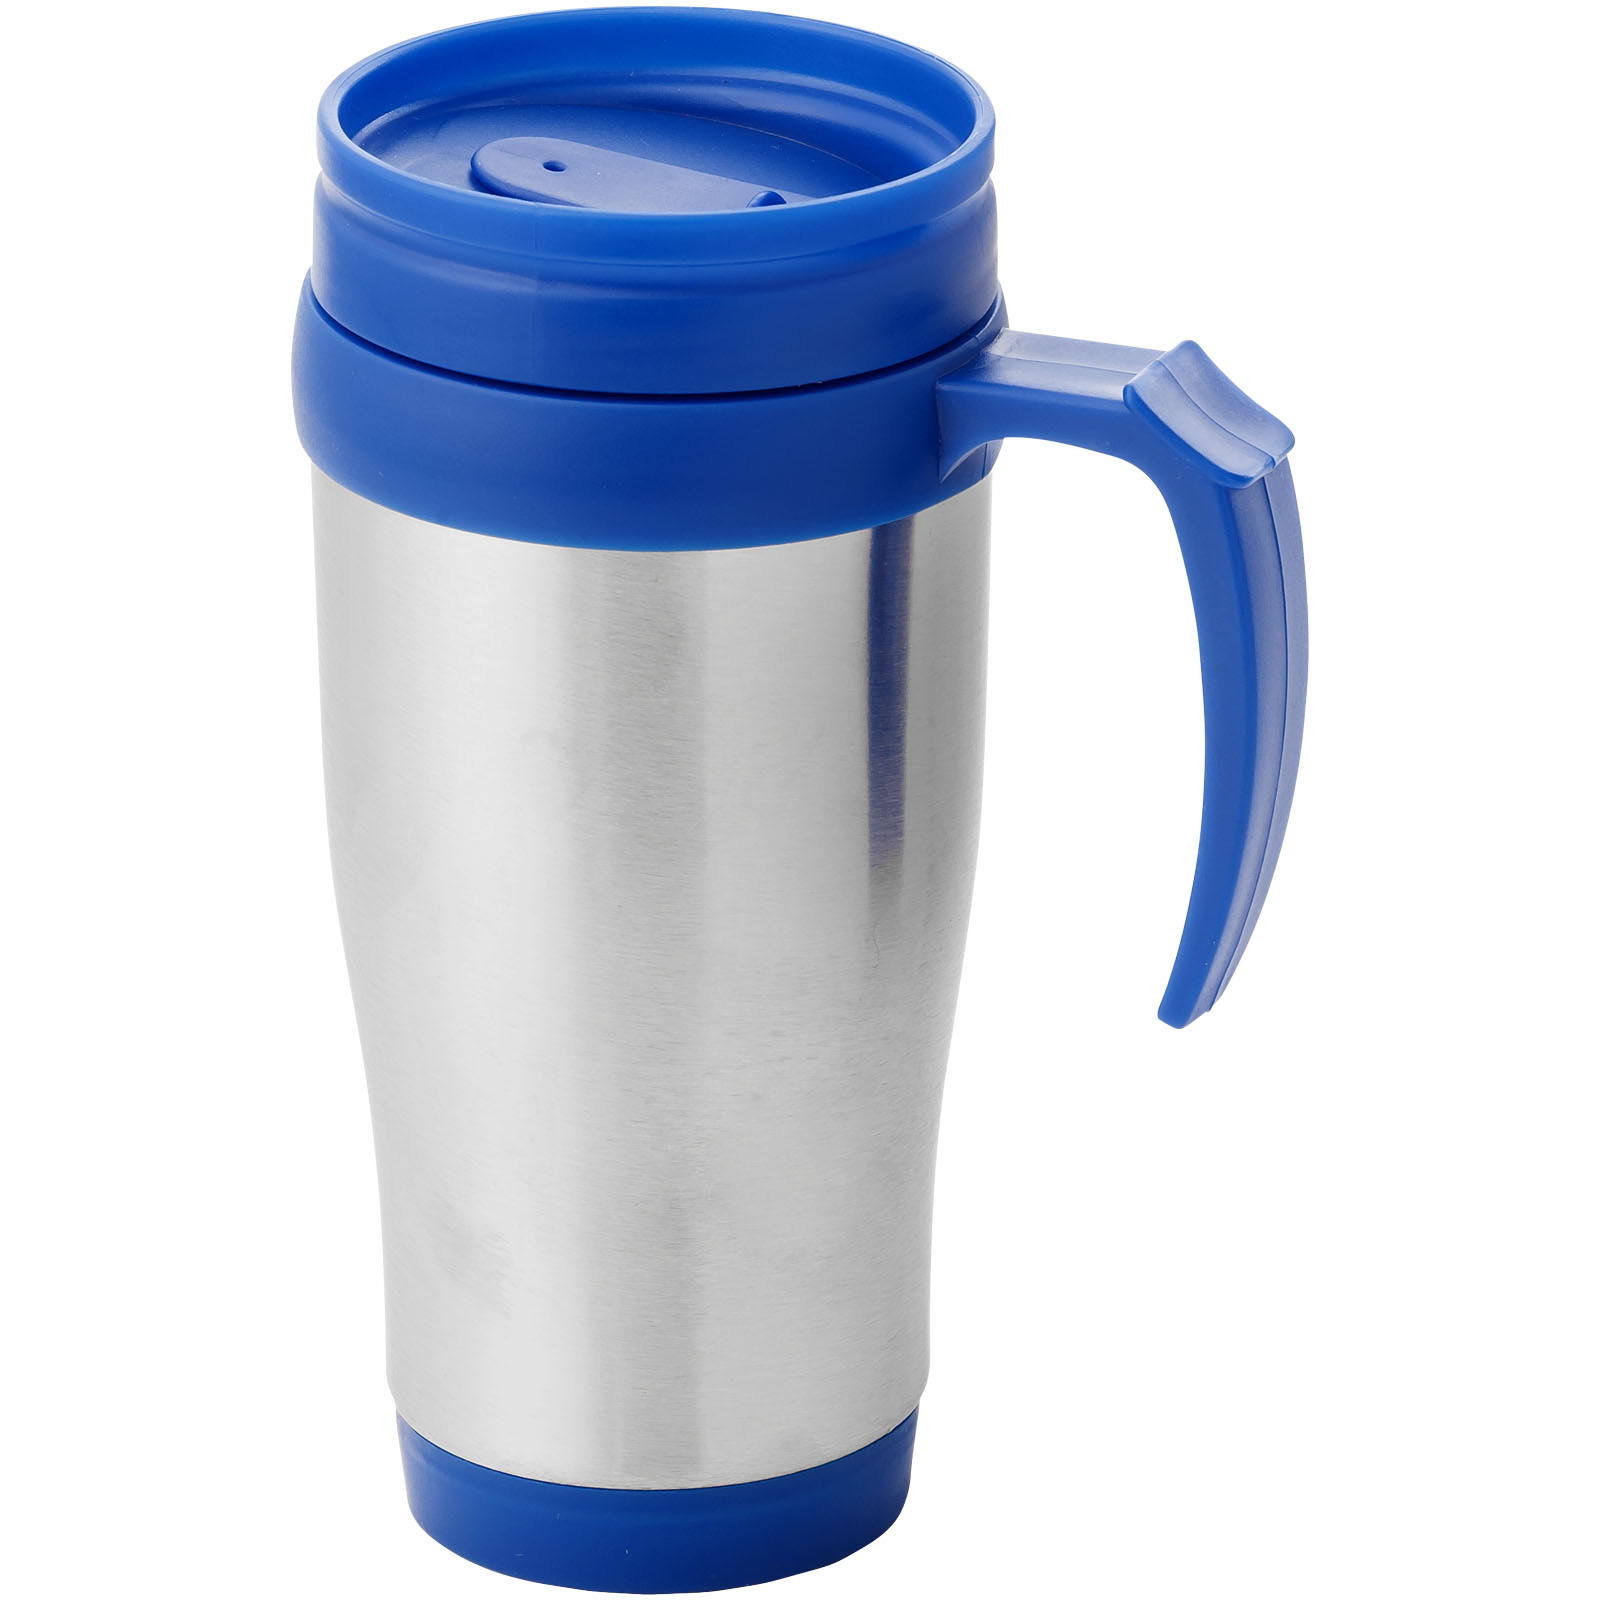 Insulated mugs - Sanibel 400 ml insulated mug